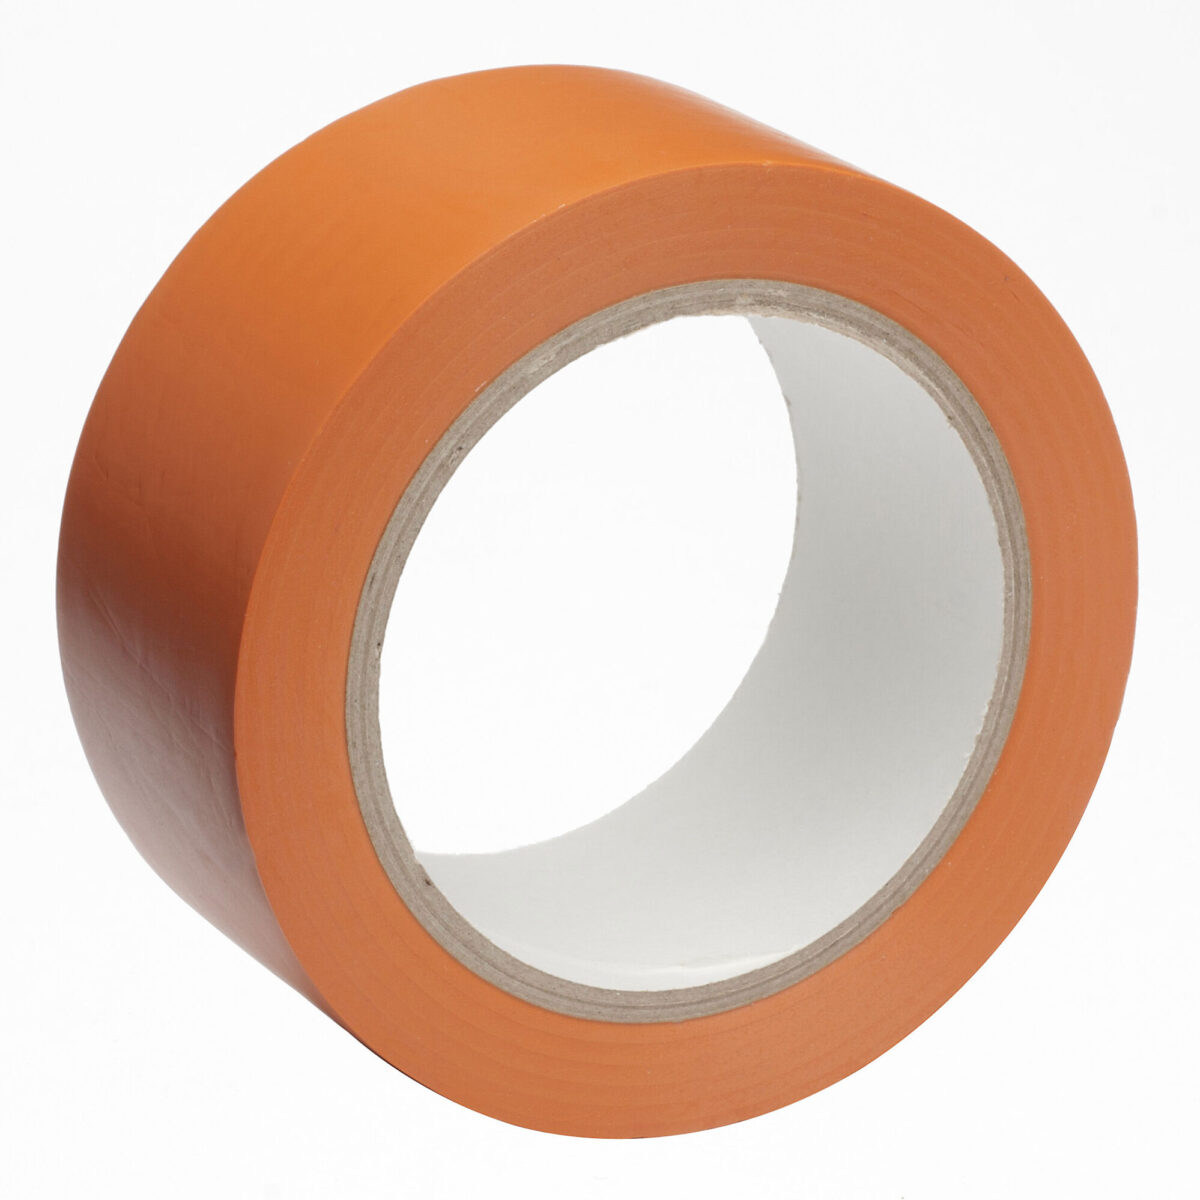 Orange Builders Tape - PVC Builders Tape from Ultratape